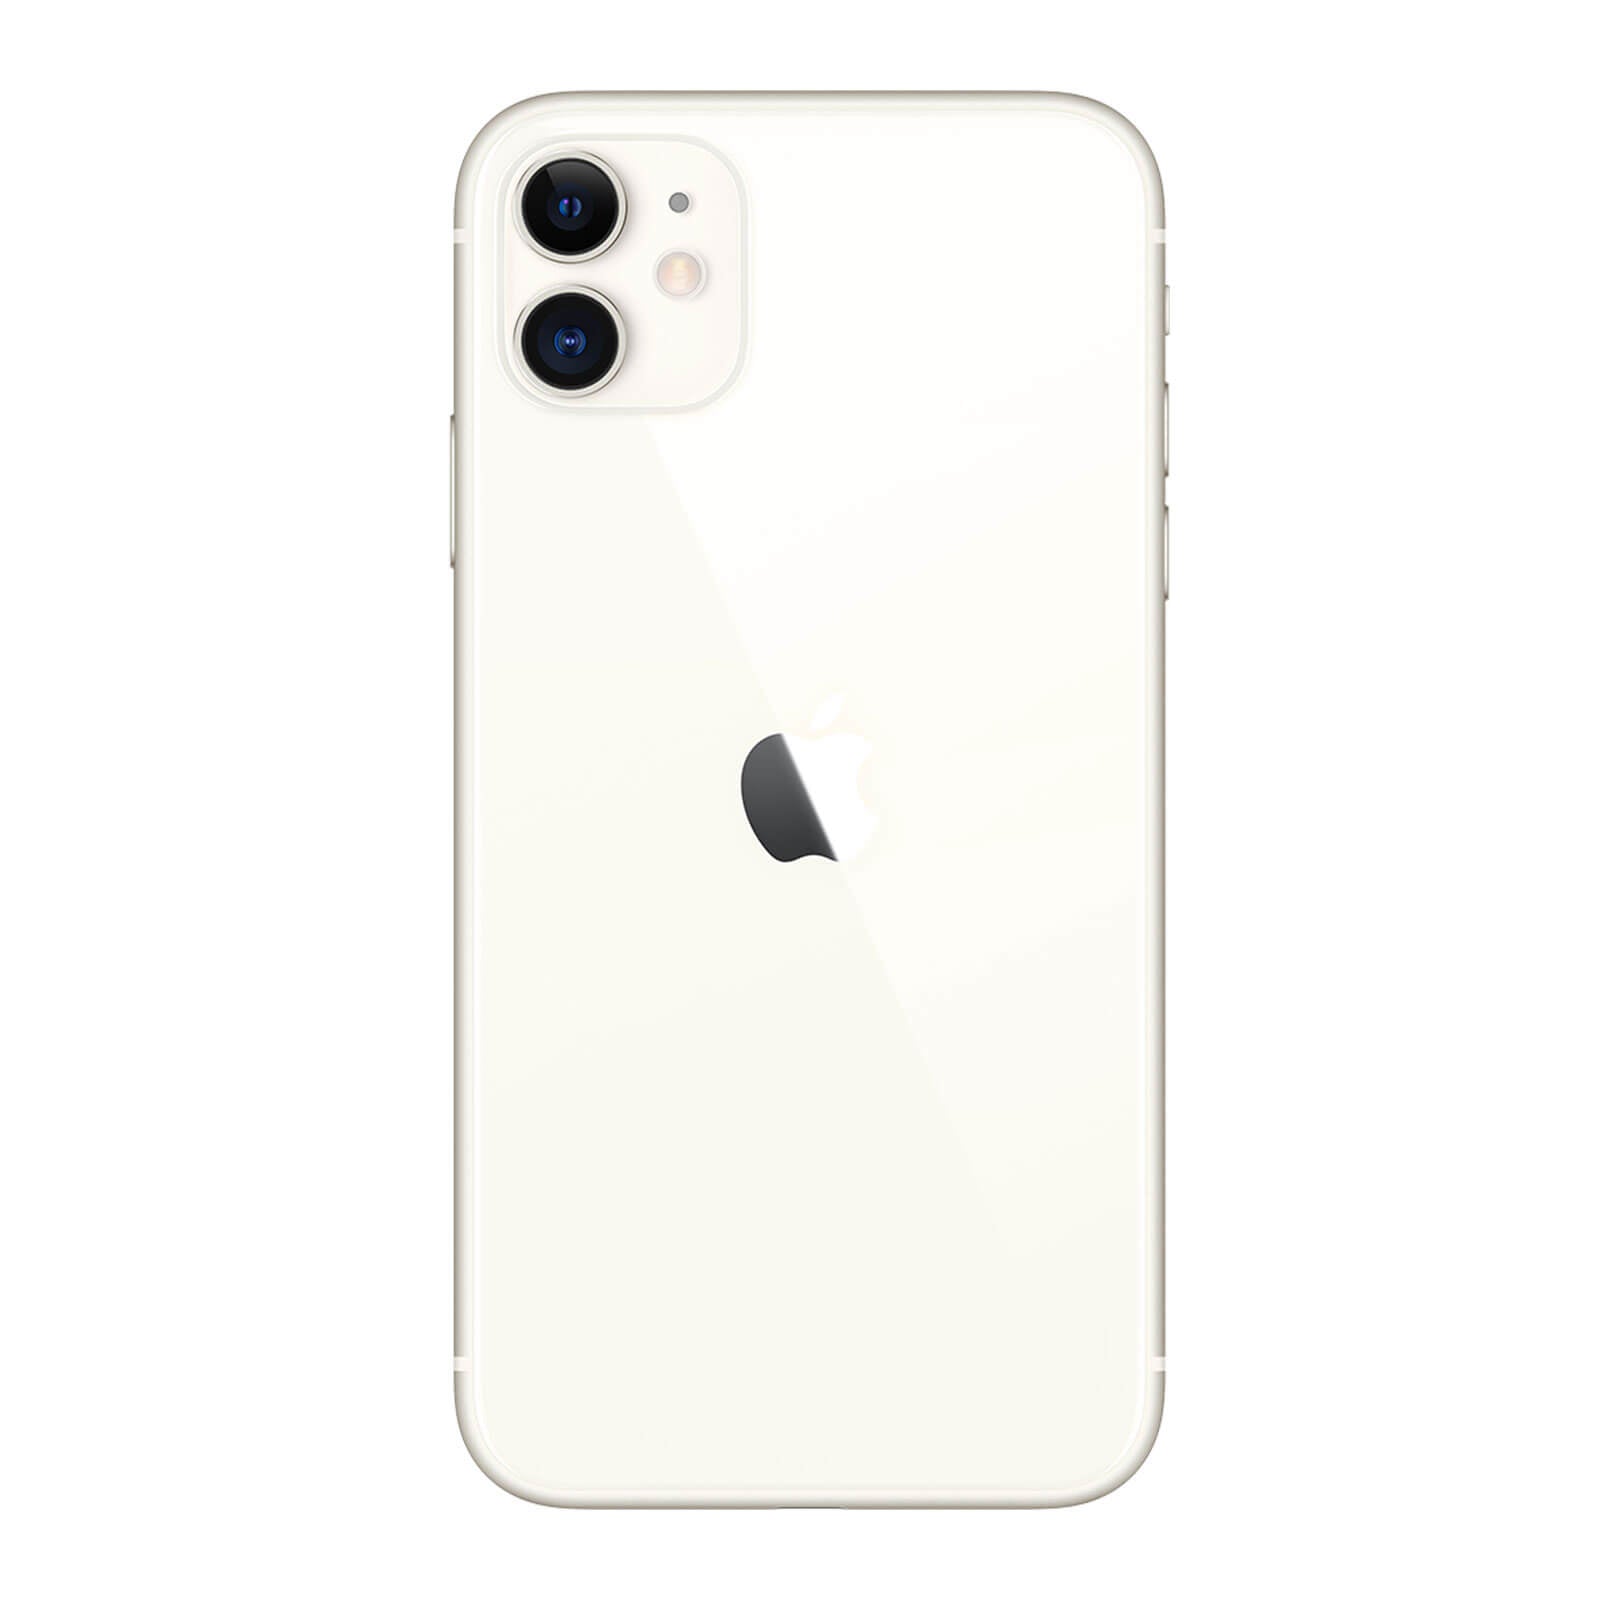 Apple iPhone 11 64GB White Good - Sprint